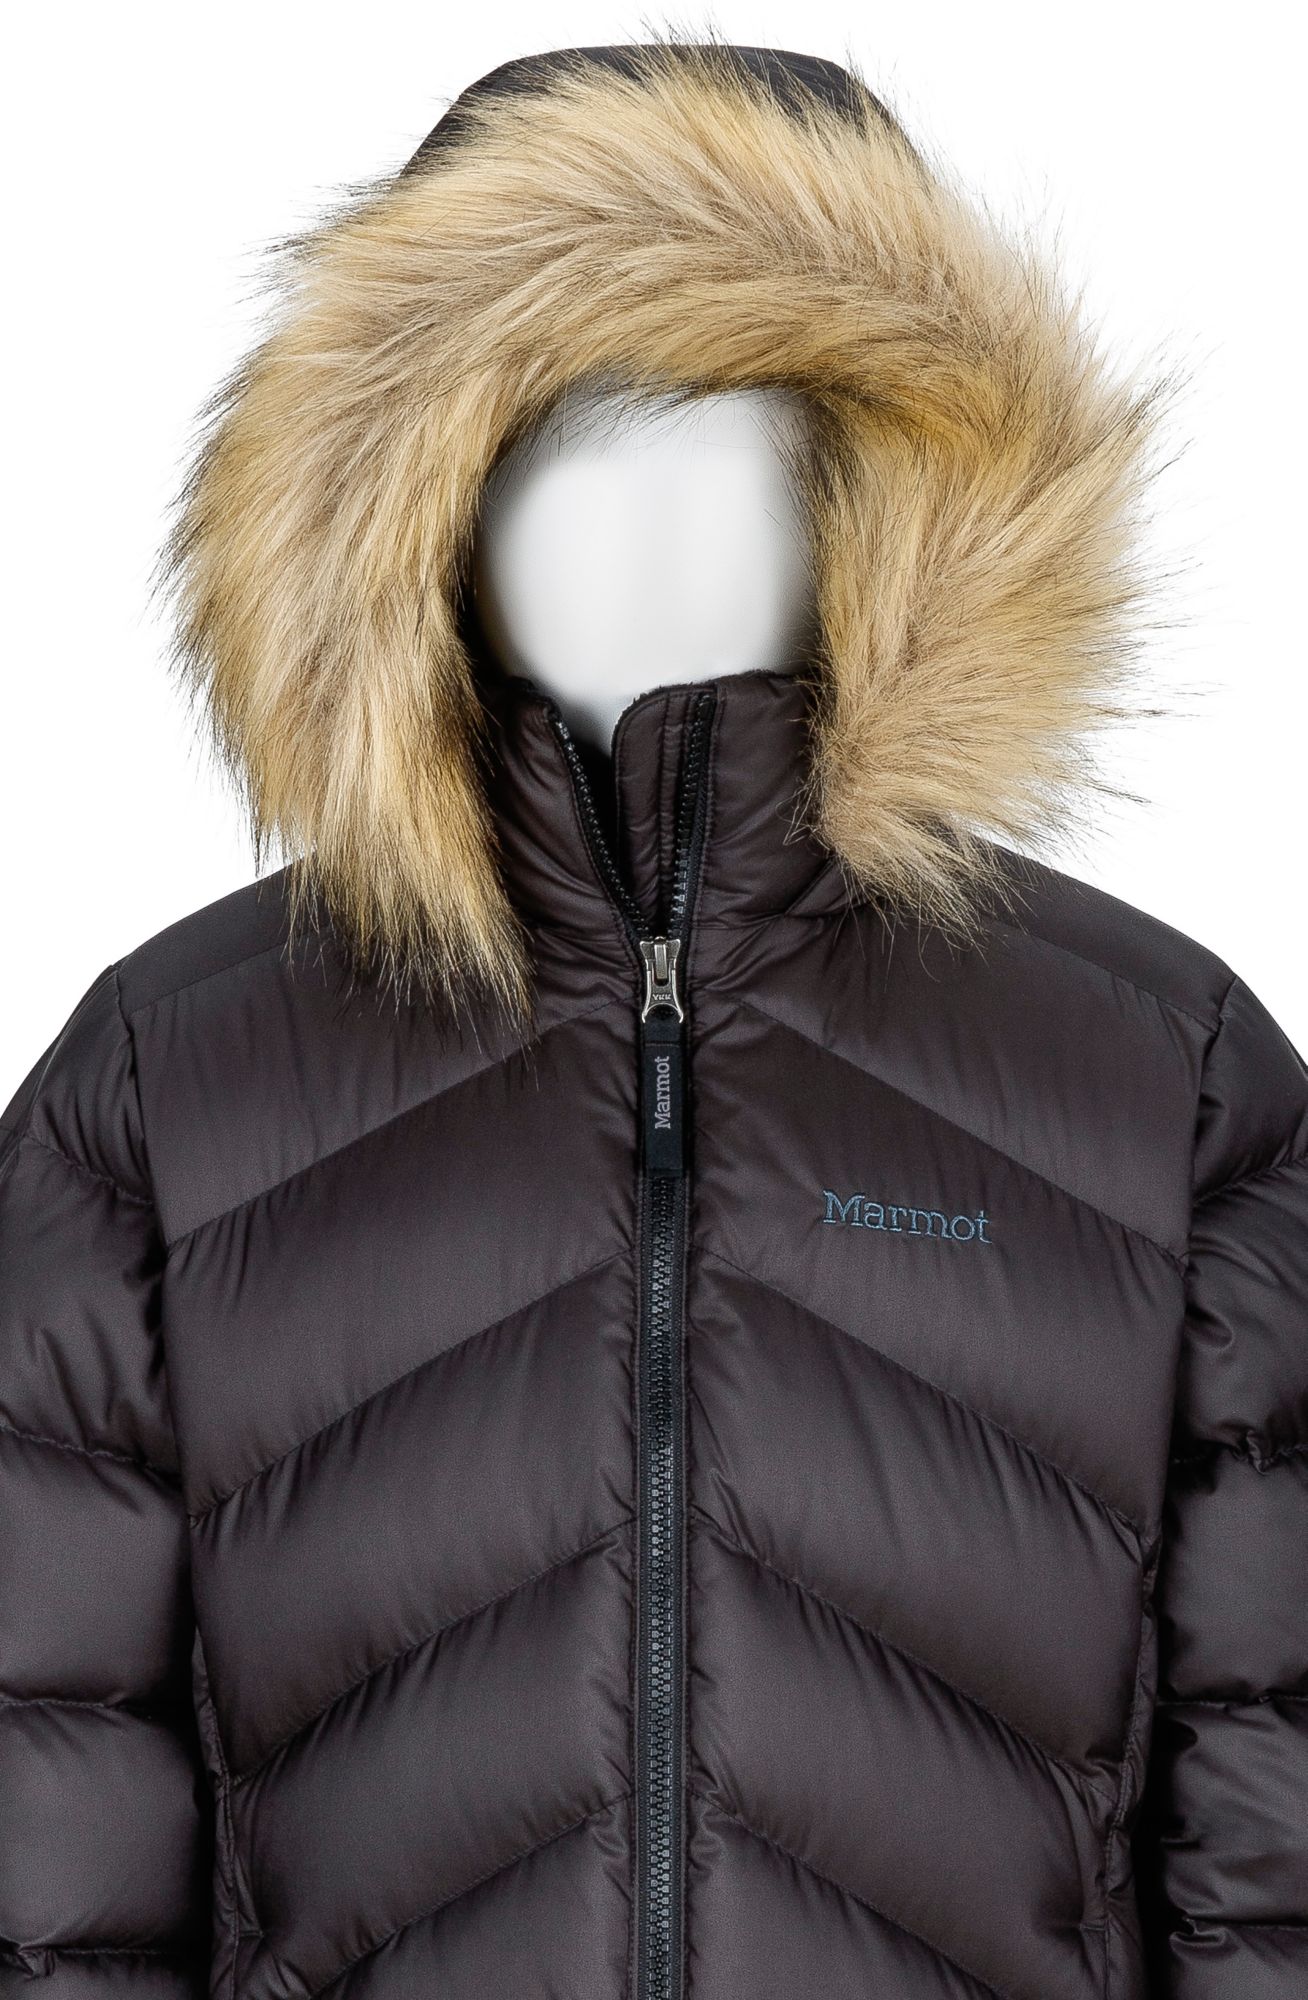 marmot jacket with fur hood